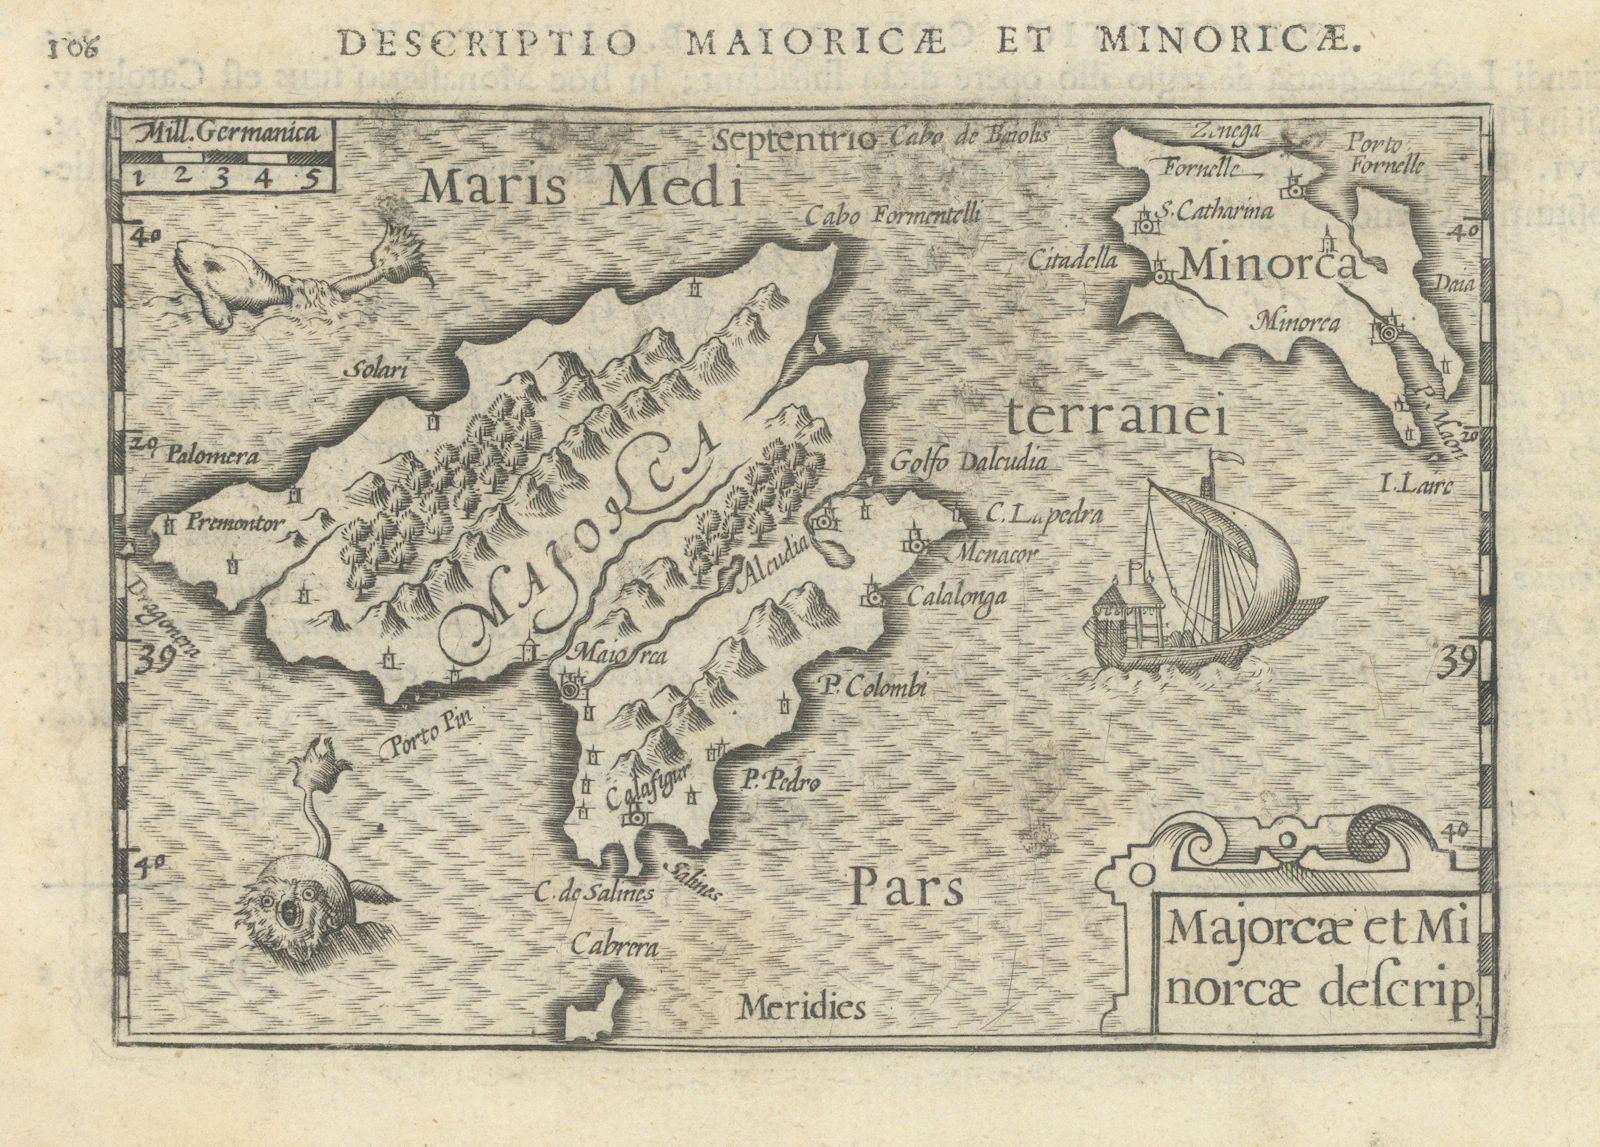 Maioricae / Majorcae et Minorcae by Bertius / Langenes. Balearics 1603 old map